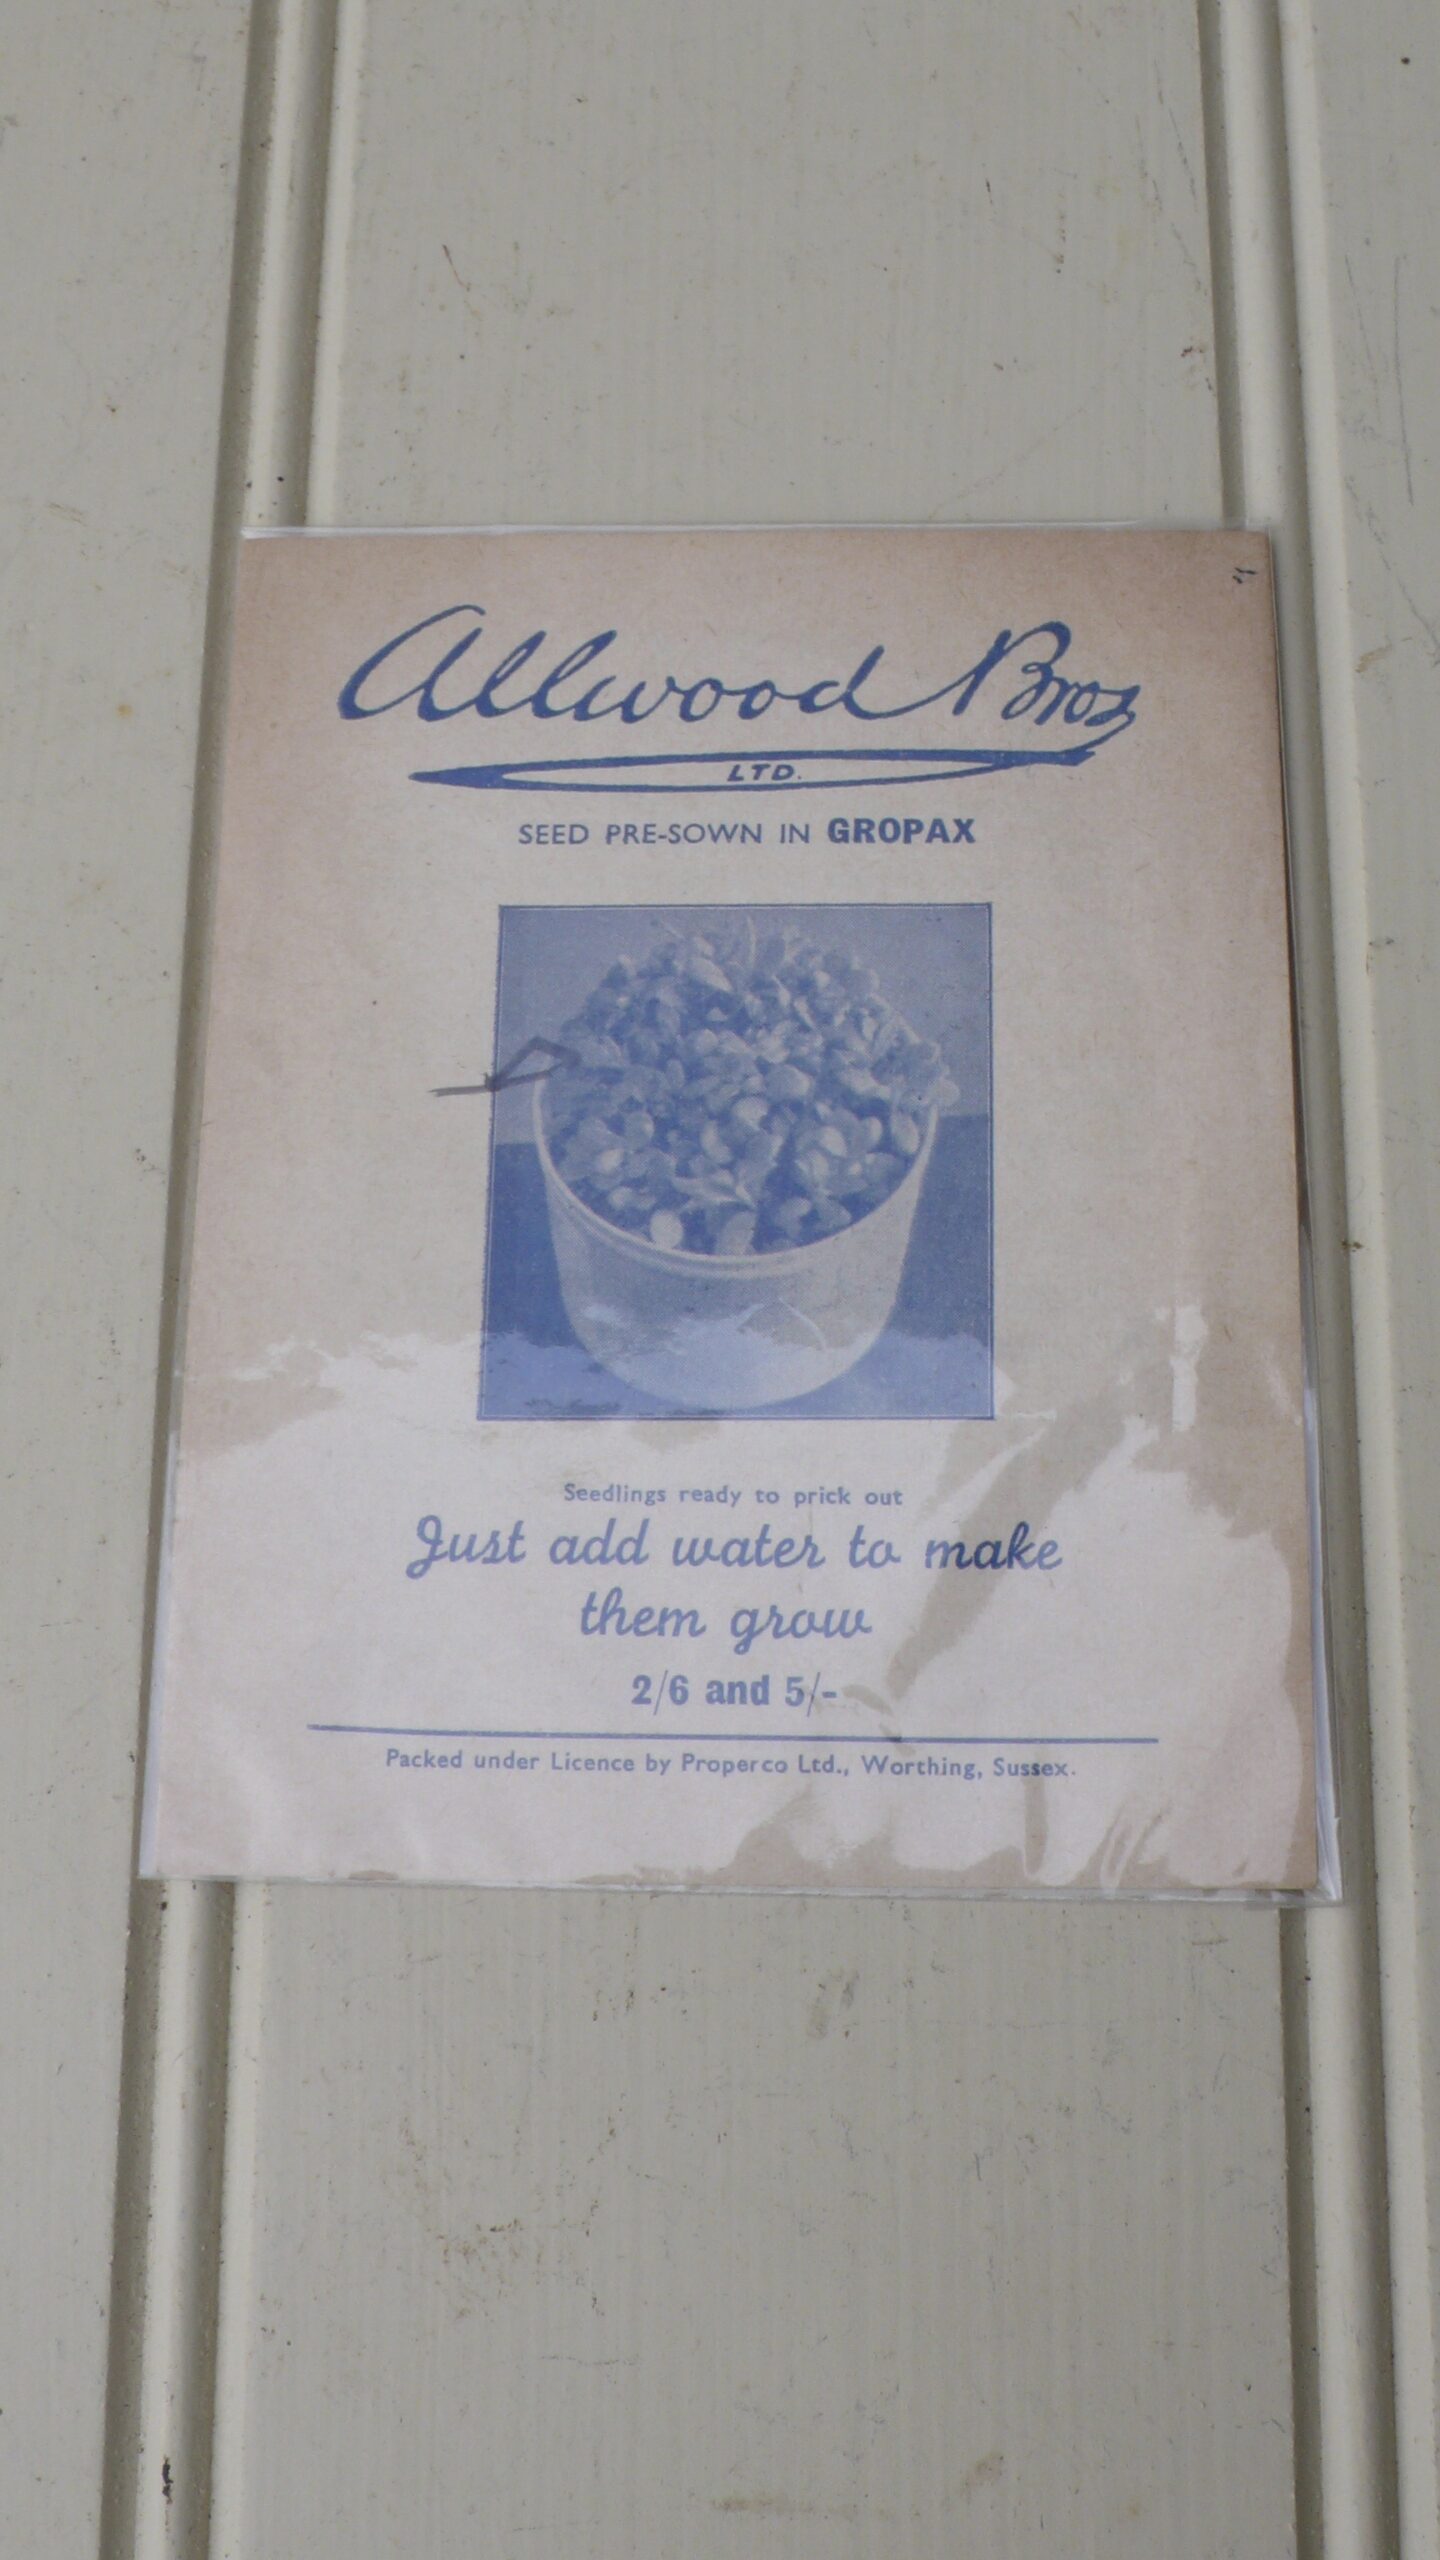 Allwood Bros Leaflet